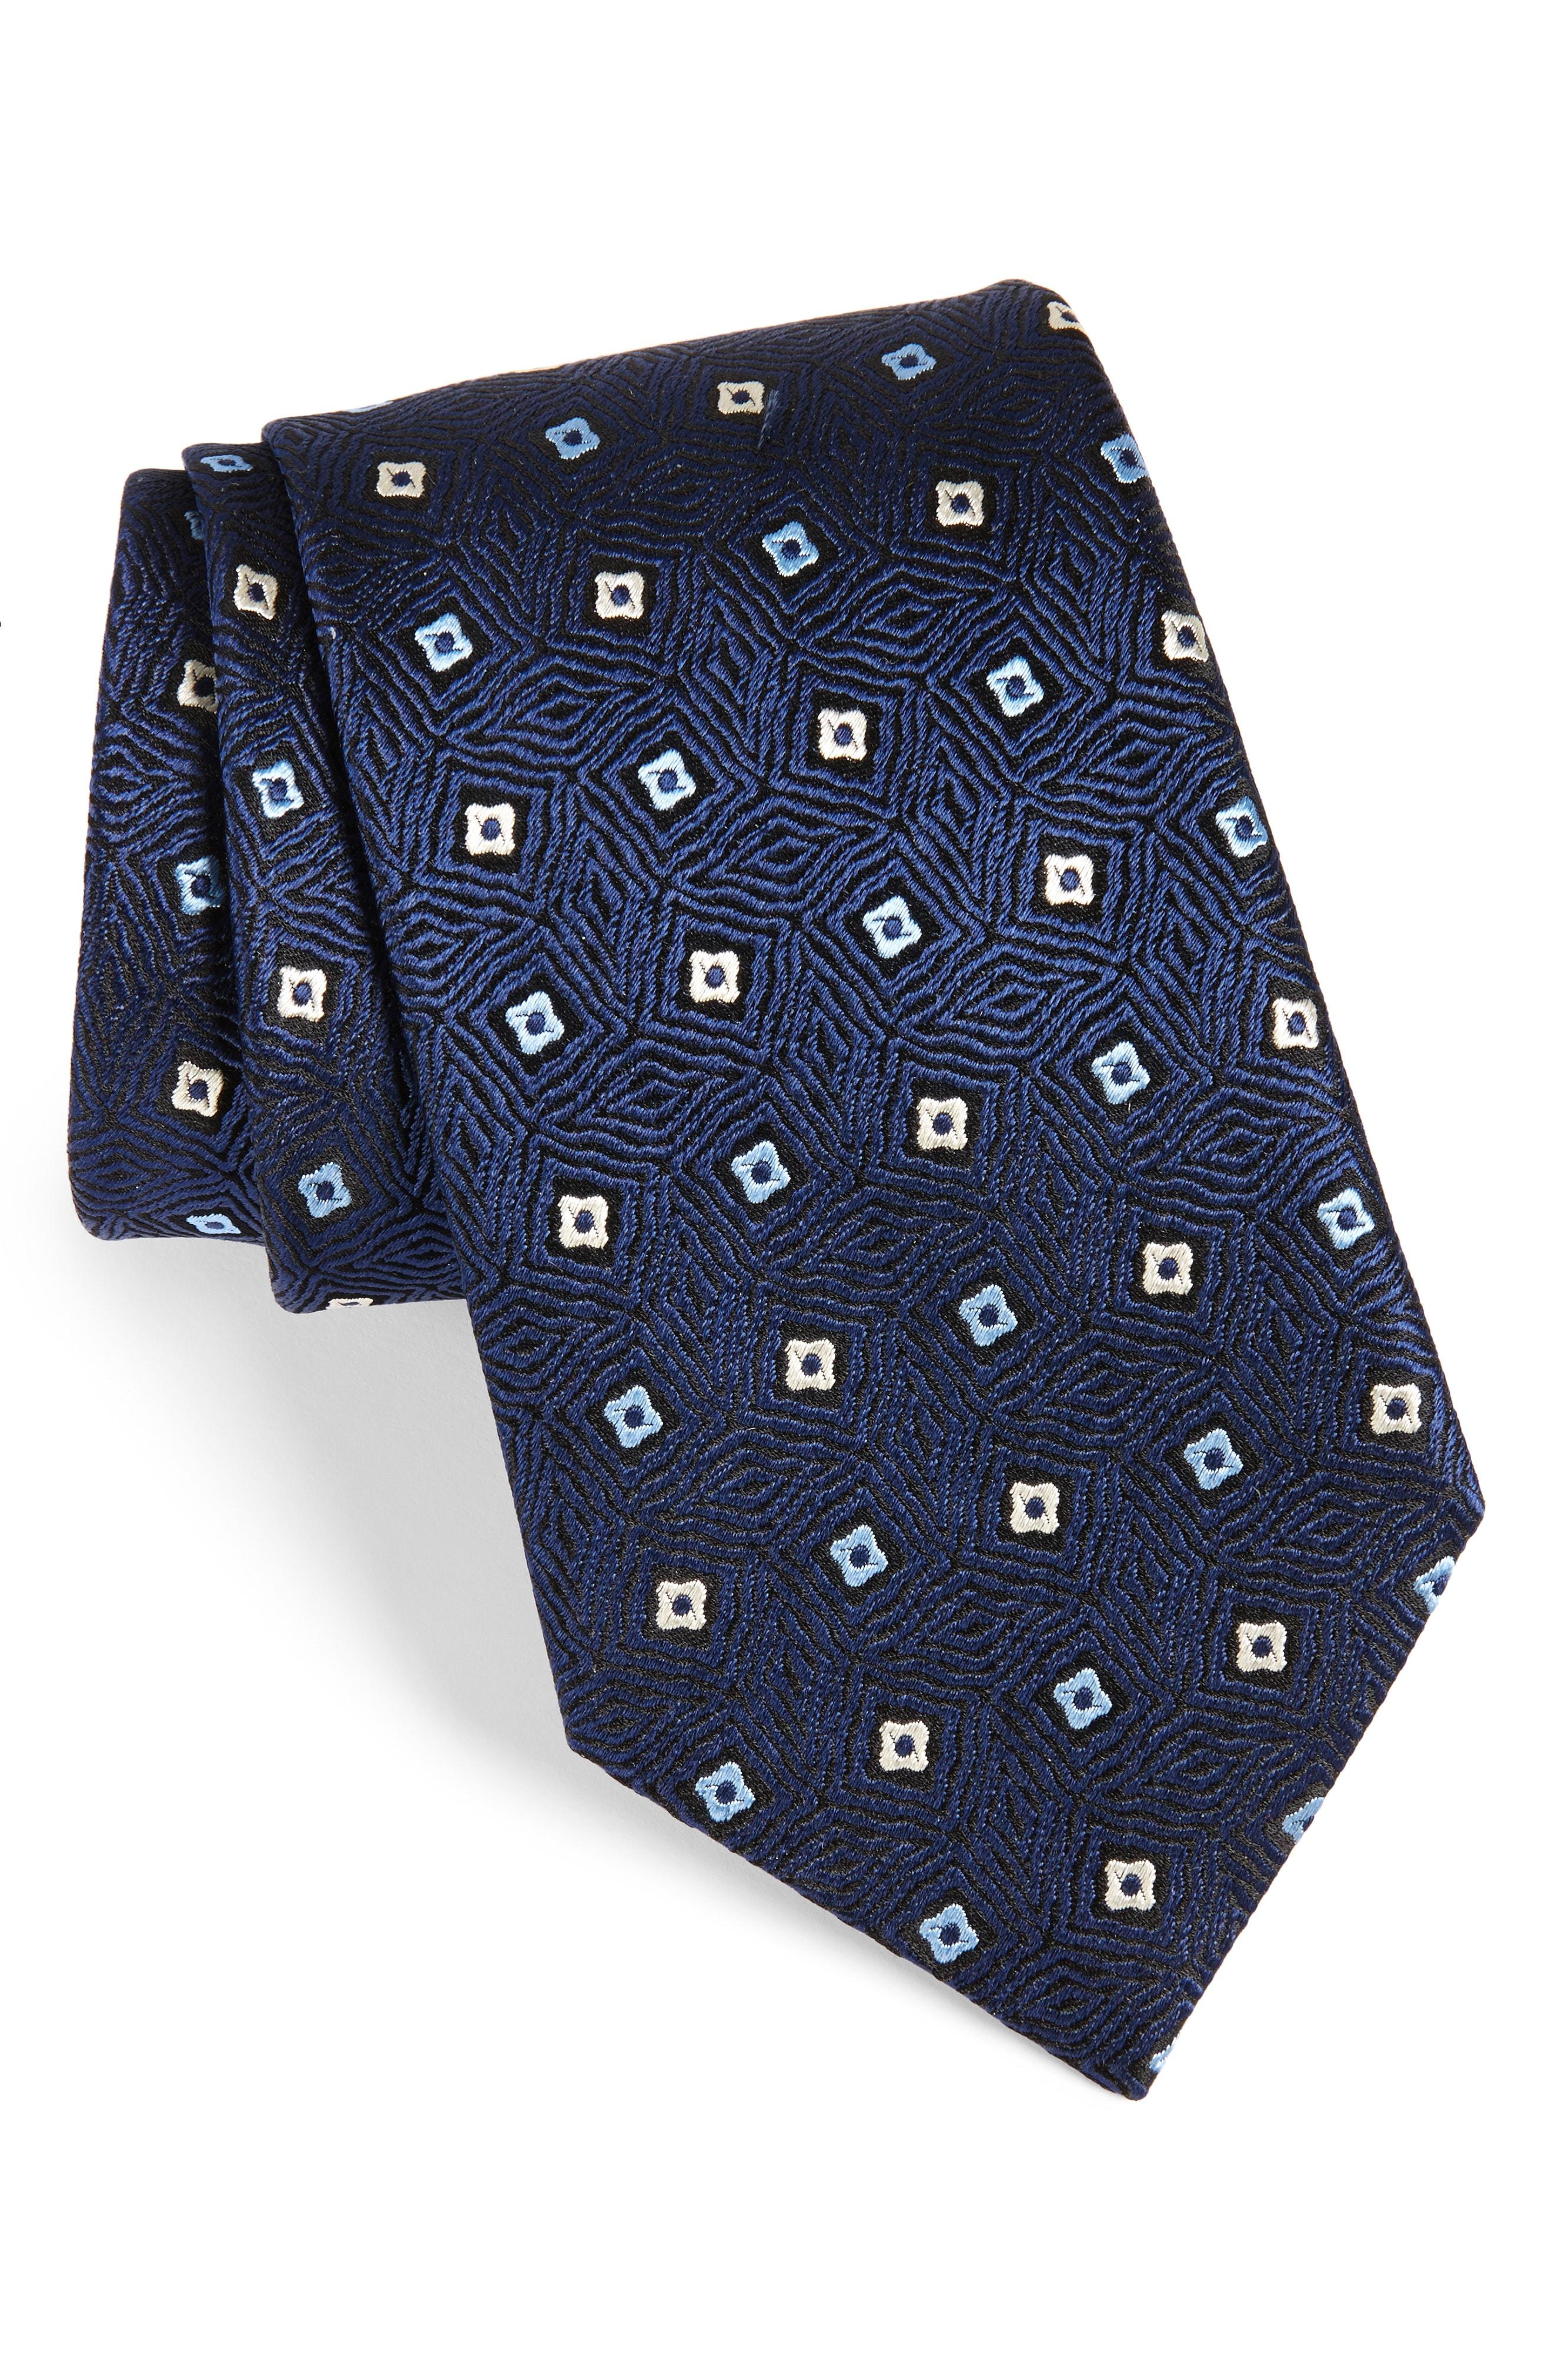 Ermenegildo Zegna Geometric Silk Tie in Blue for Men - Lyst